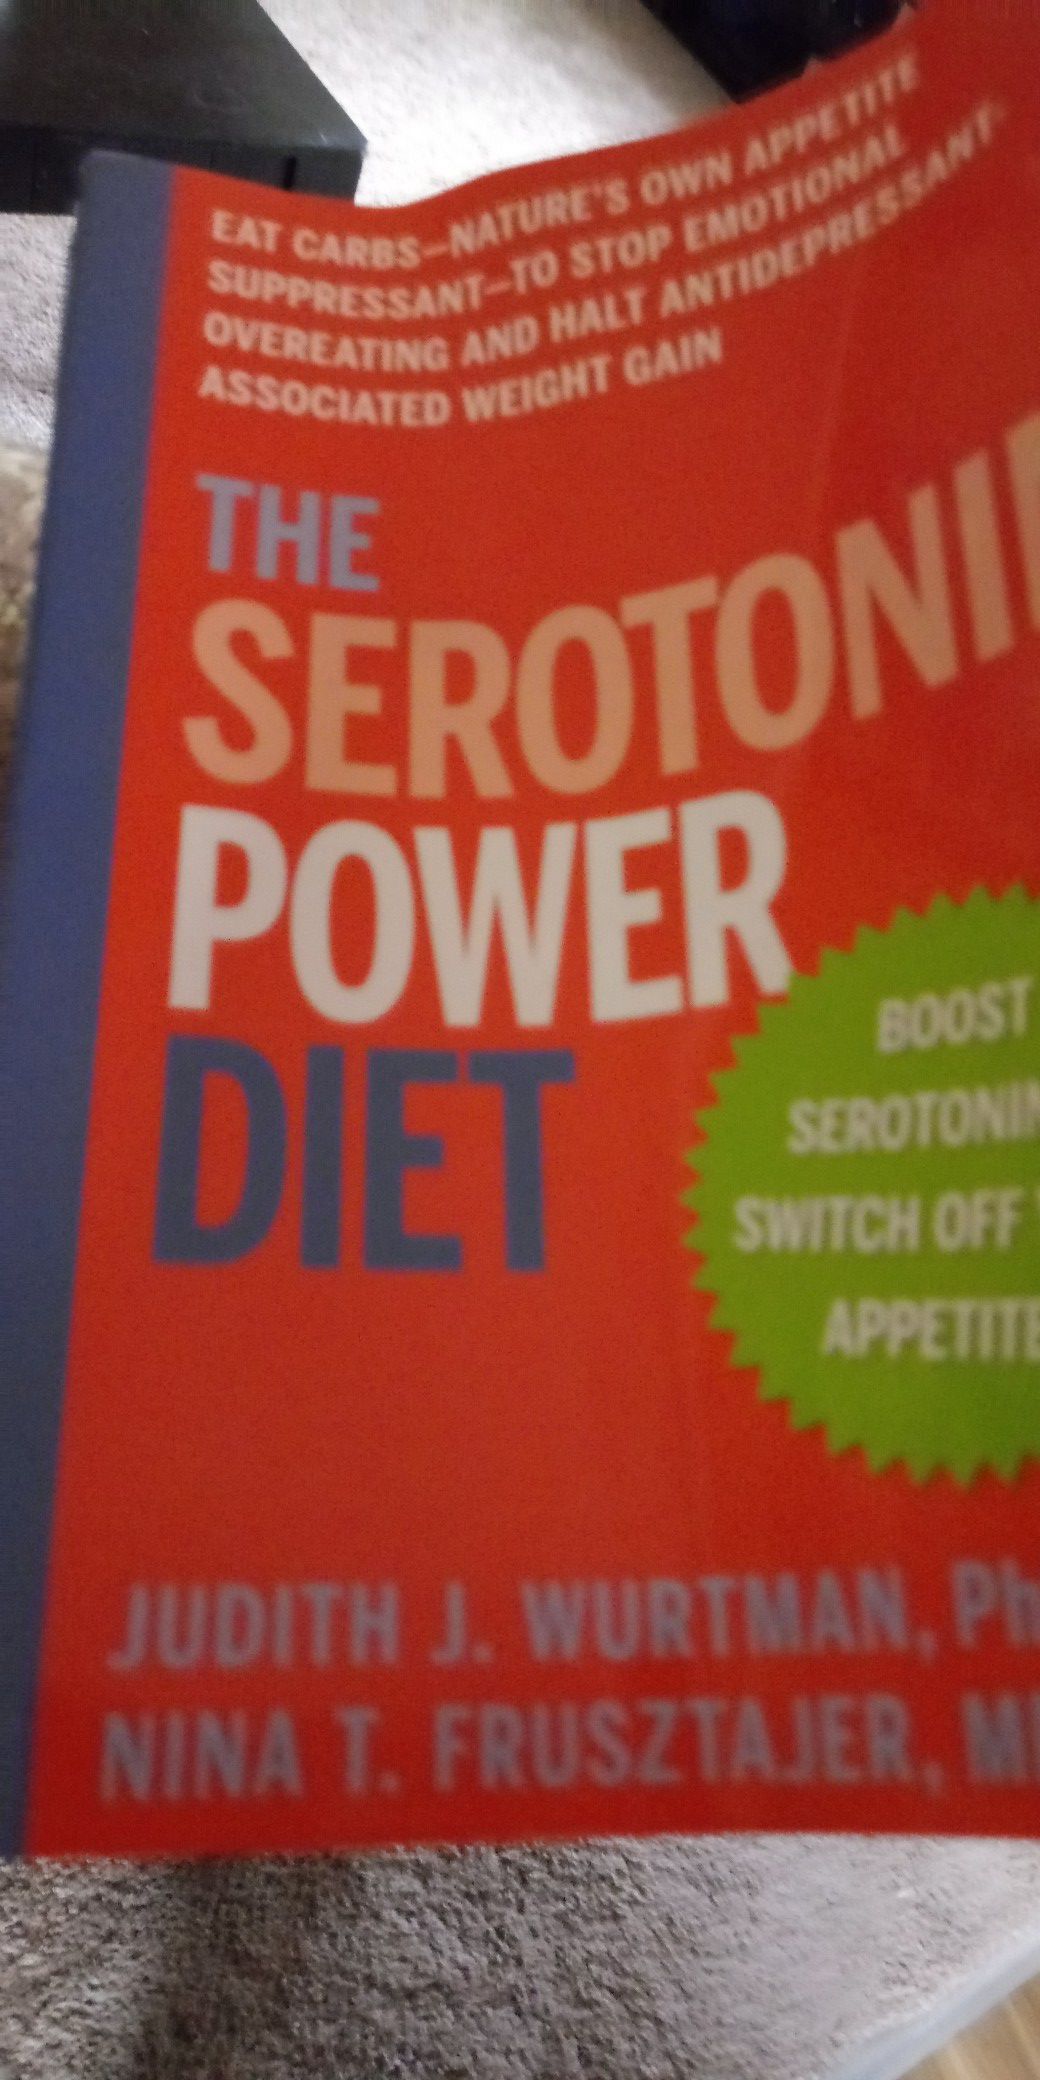 Serotonin power diet paperback